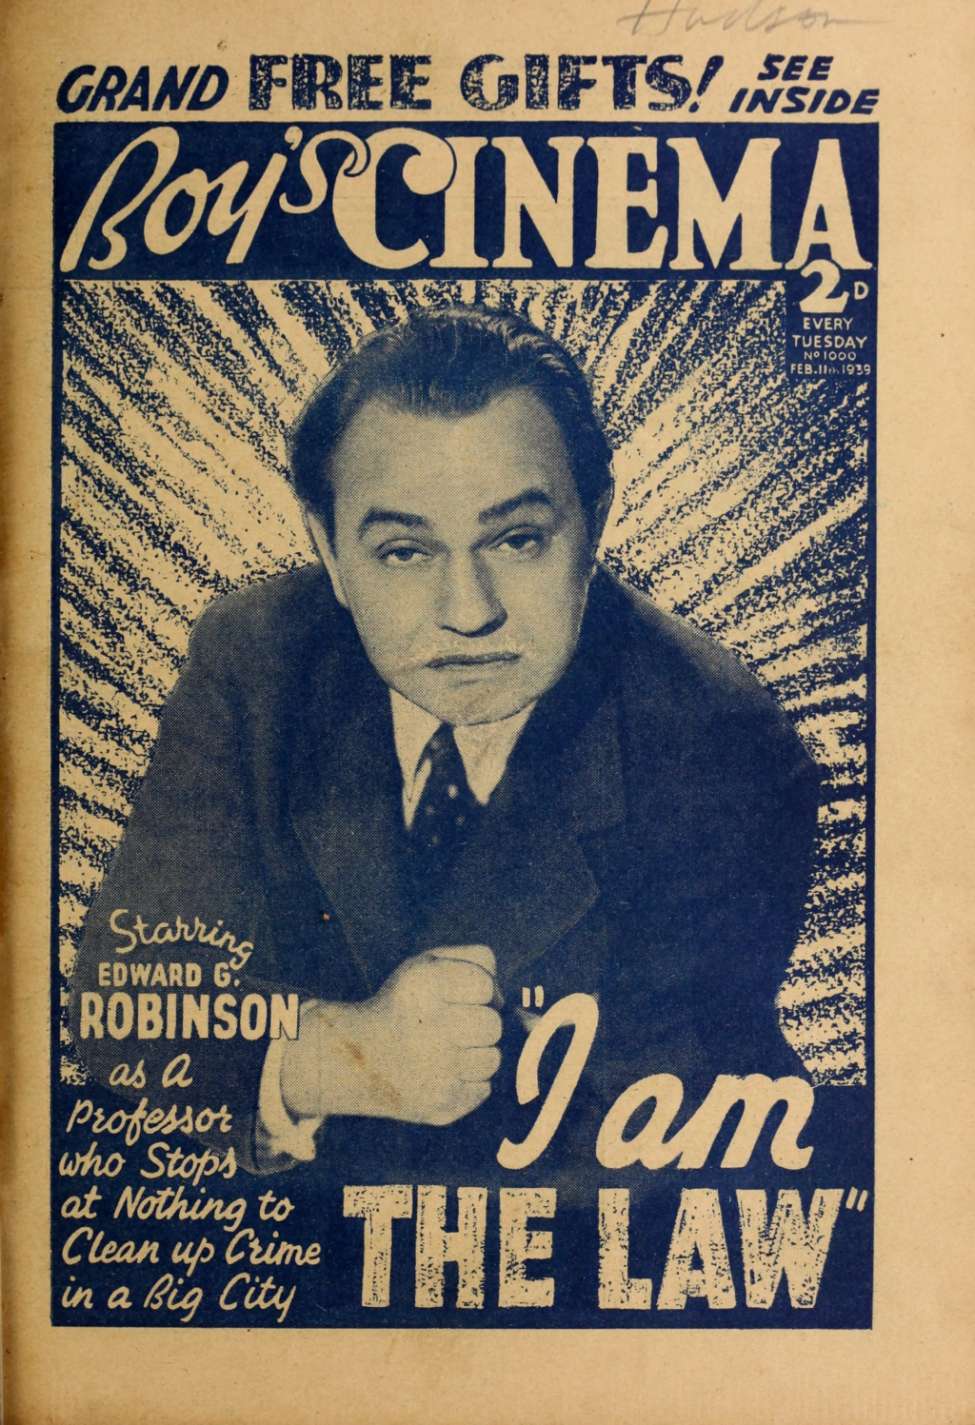 Comic Book Cover For Boy's Cinema 1000 - I am the Law - Edward G. Robinson